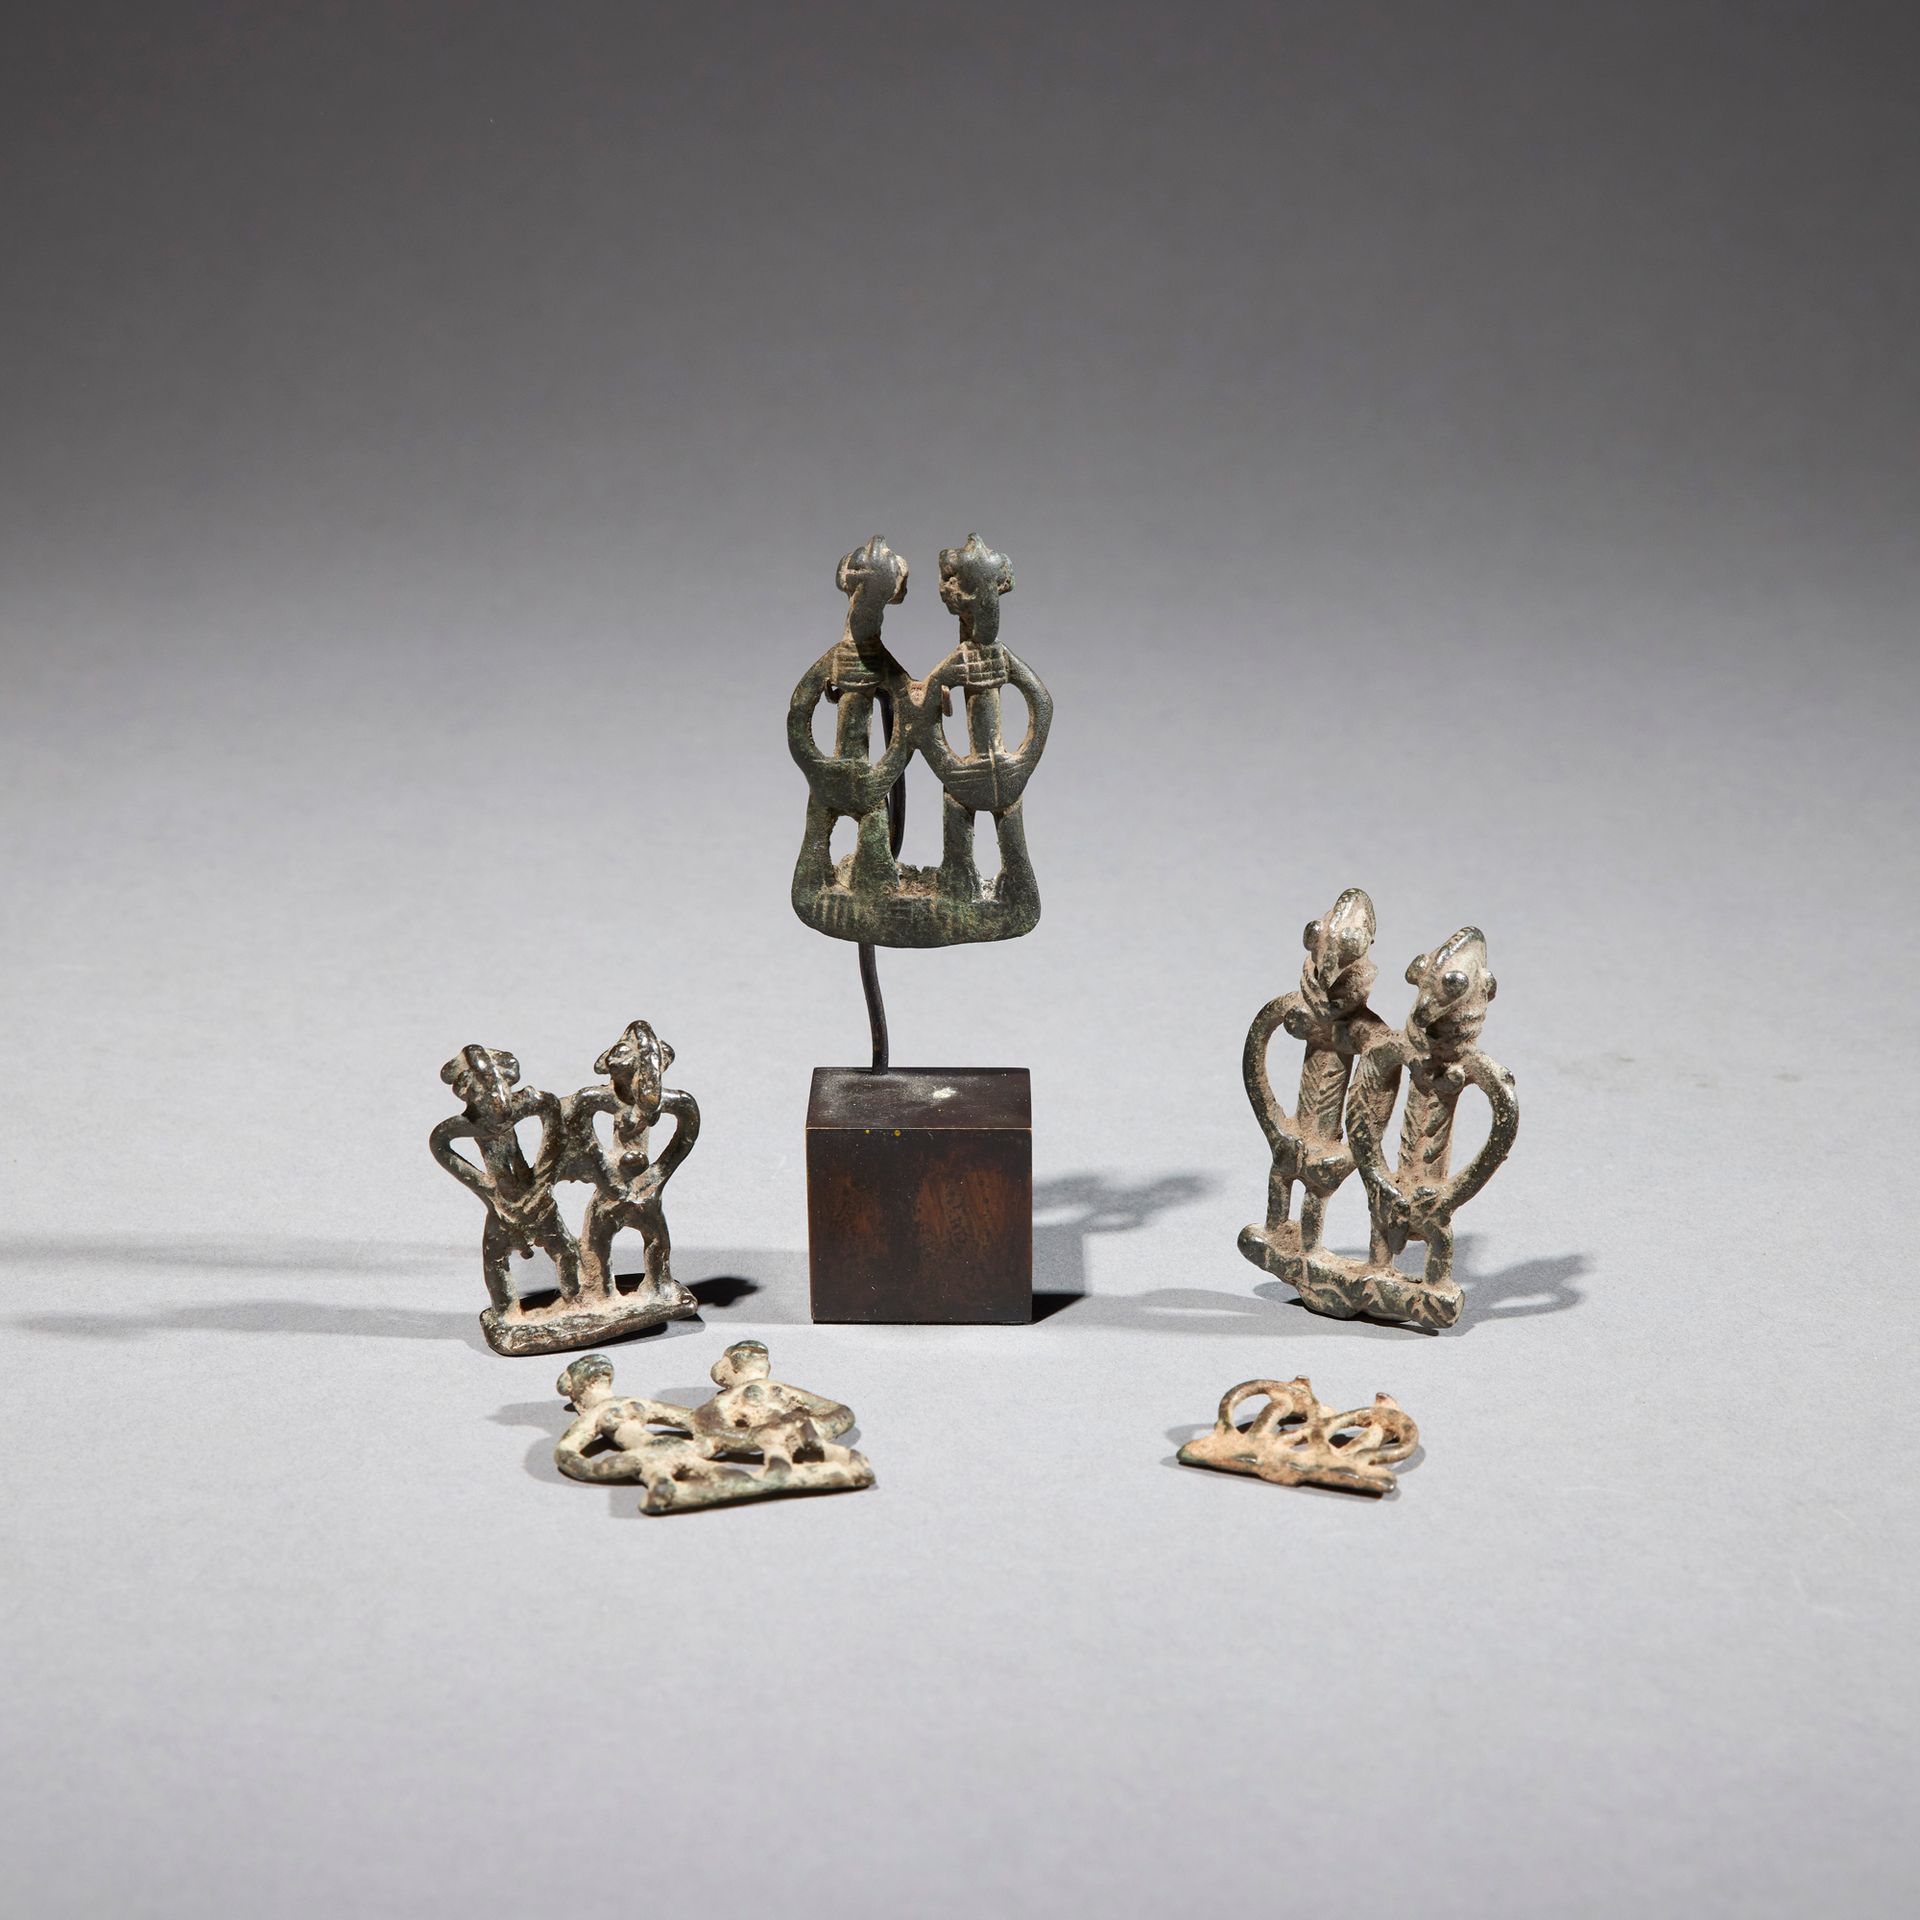 Null 五个塞努弗护身符

象牙海岸

铜质

H.2.2至5厘米



一套五个塞努弗铜制护身符，每个都有两个人物。